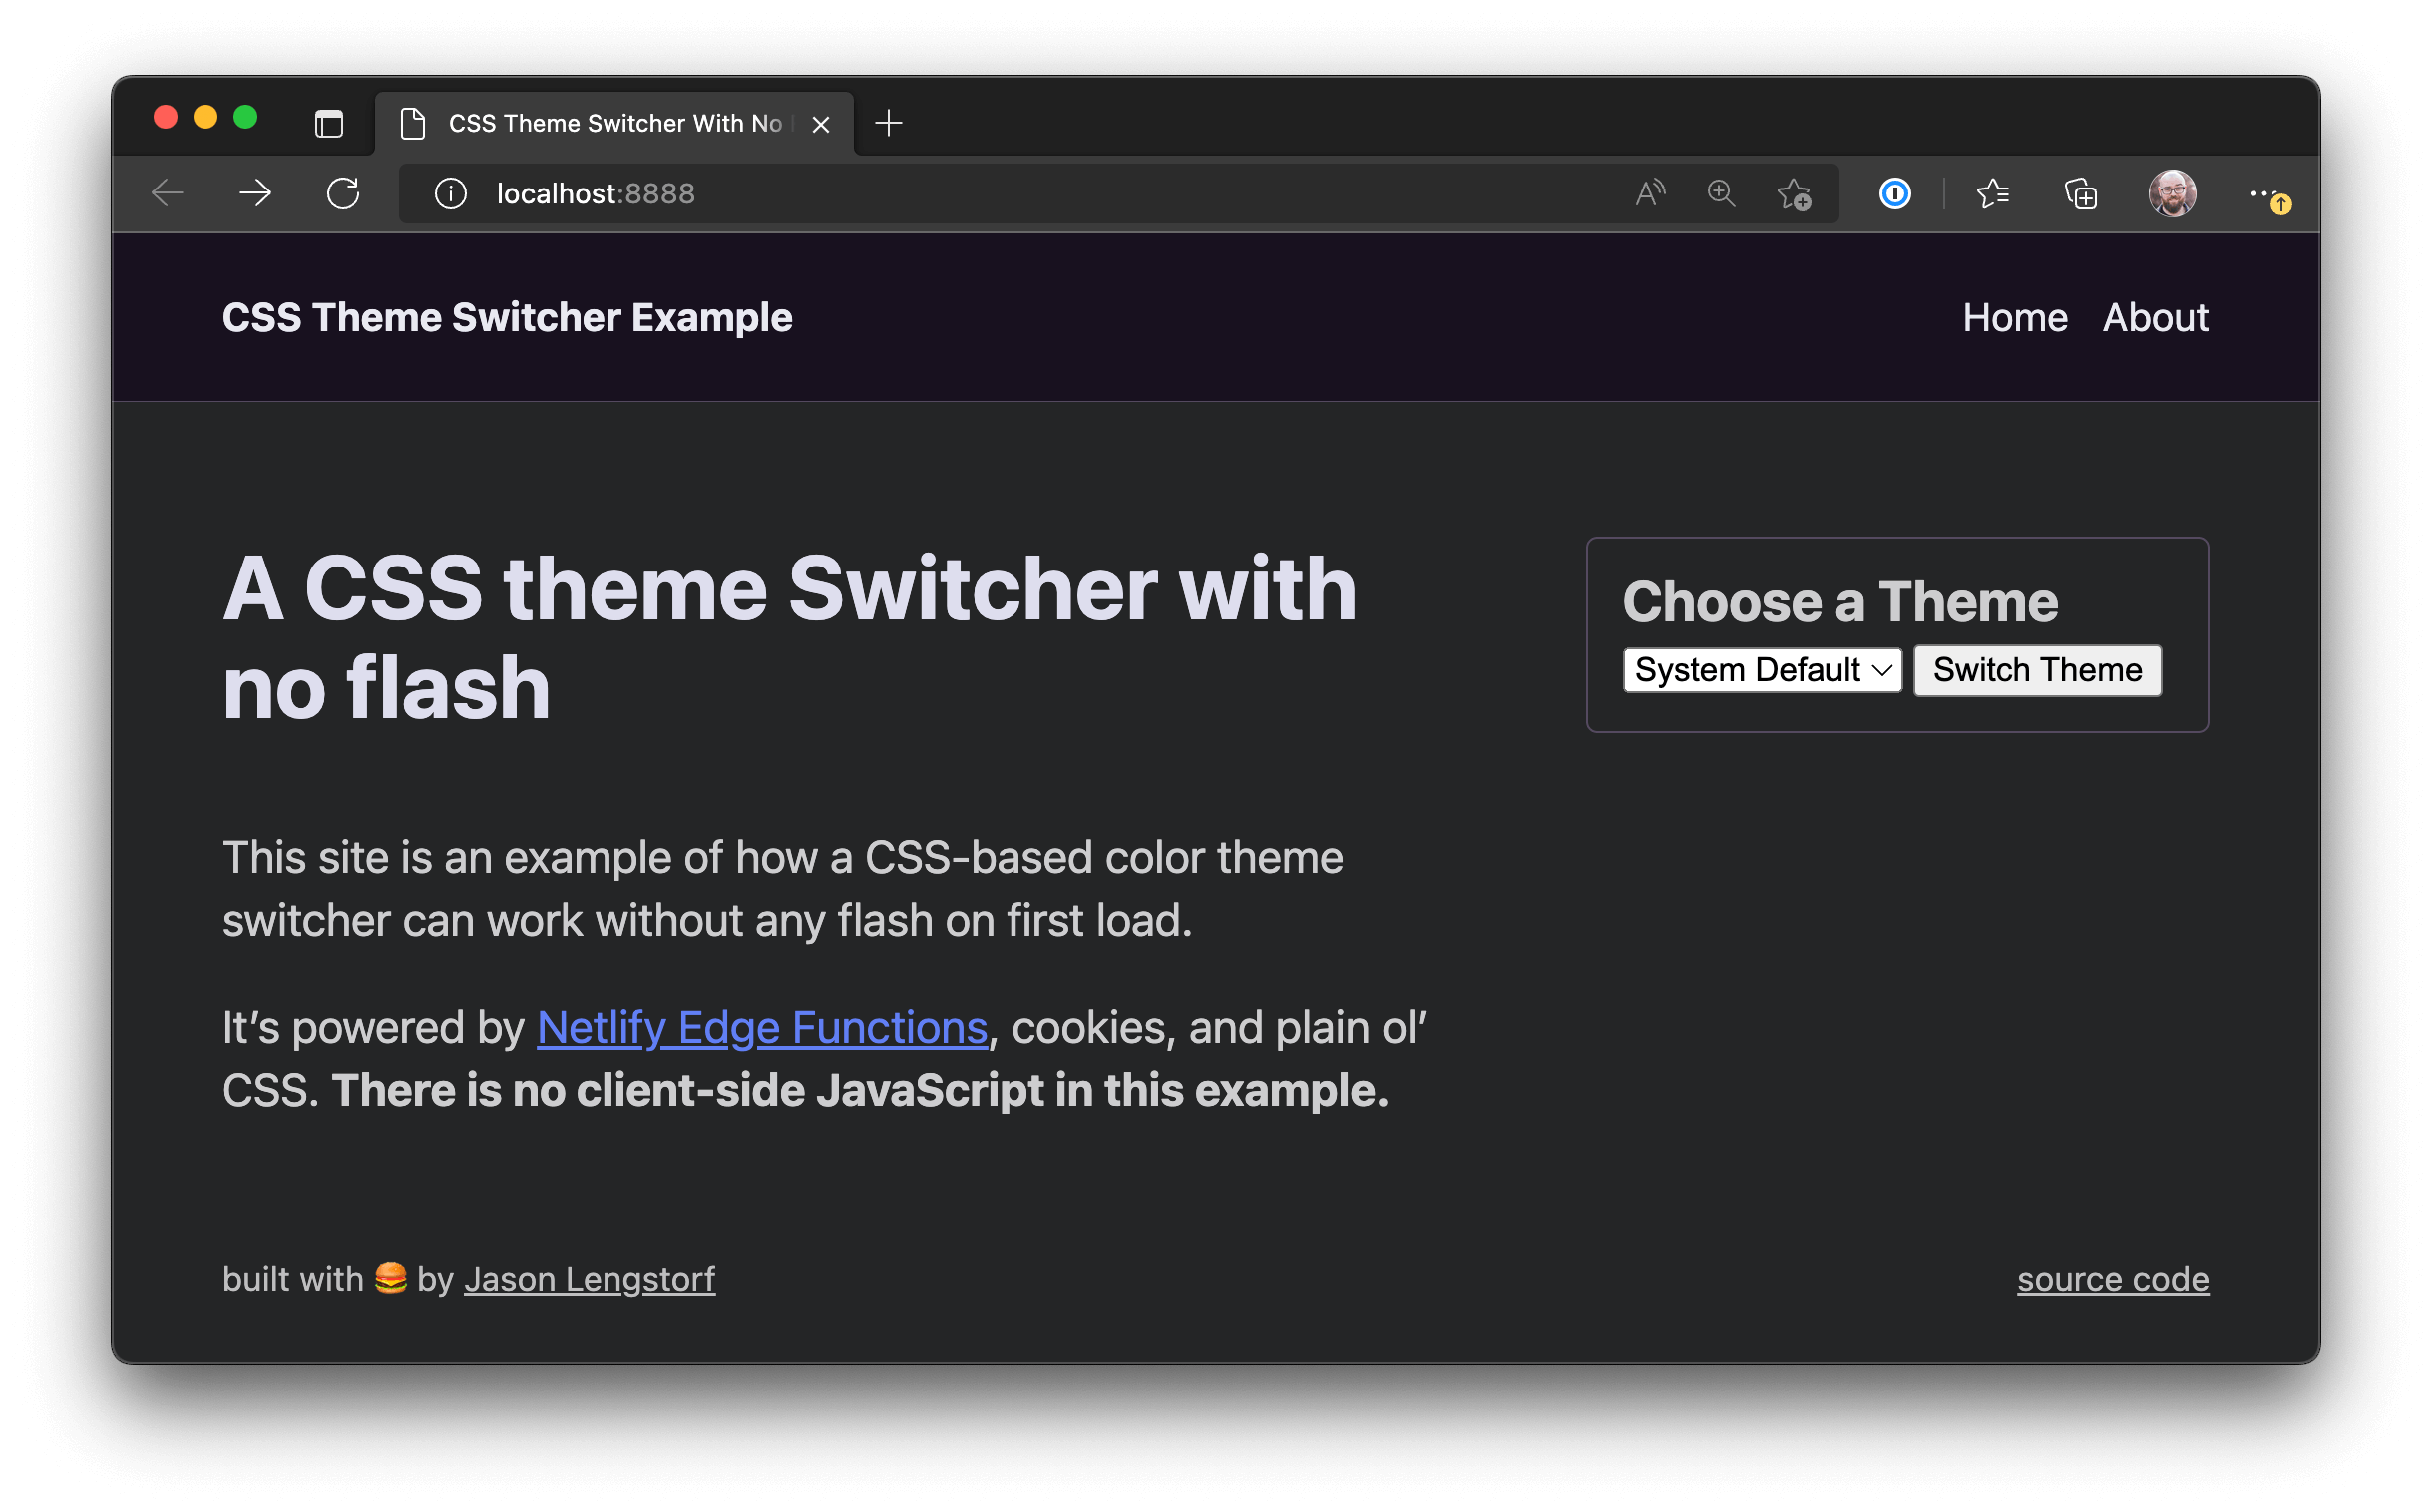 The CSS theme switcher demo running locally